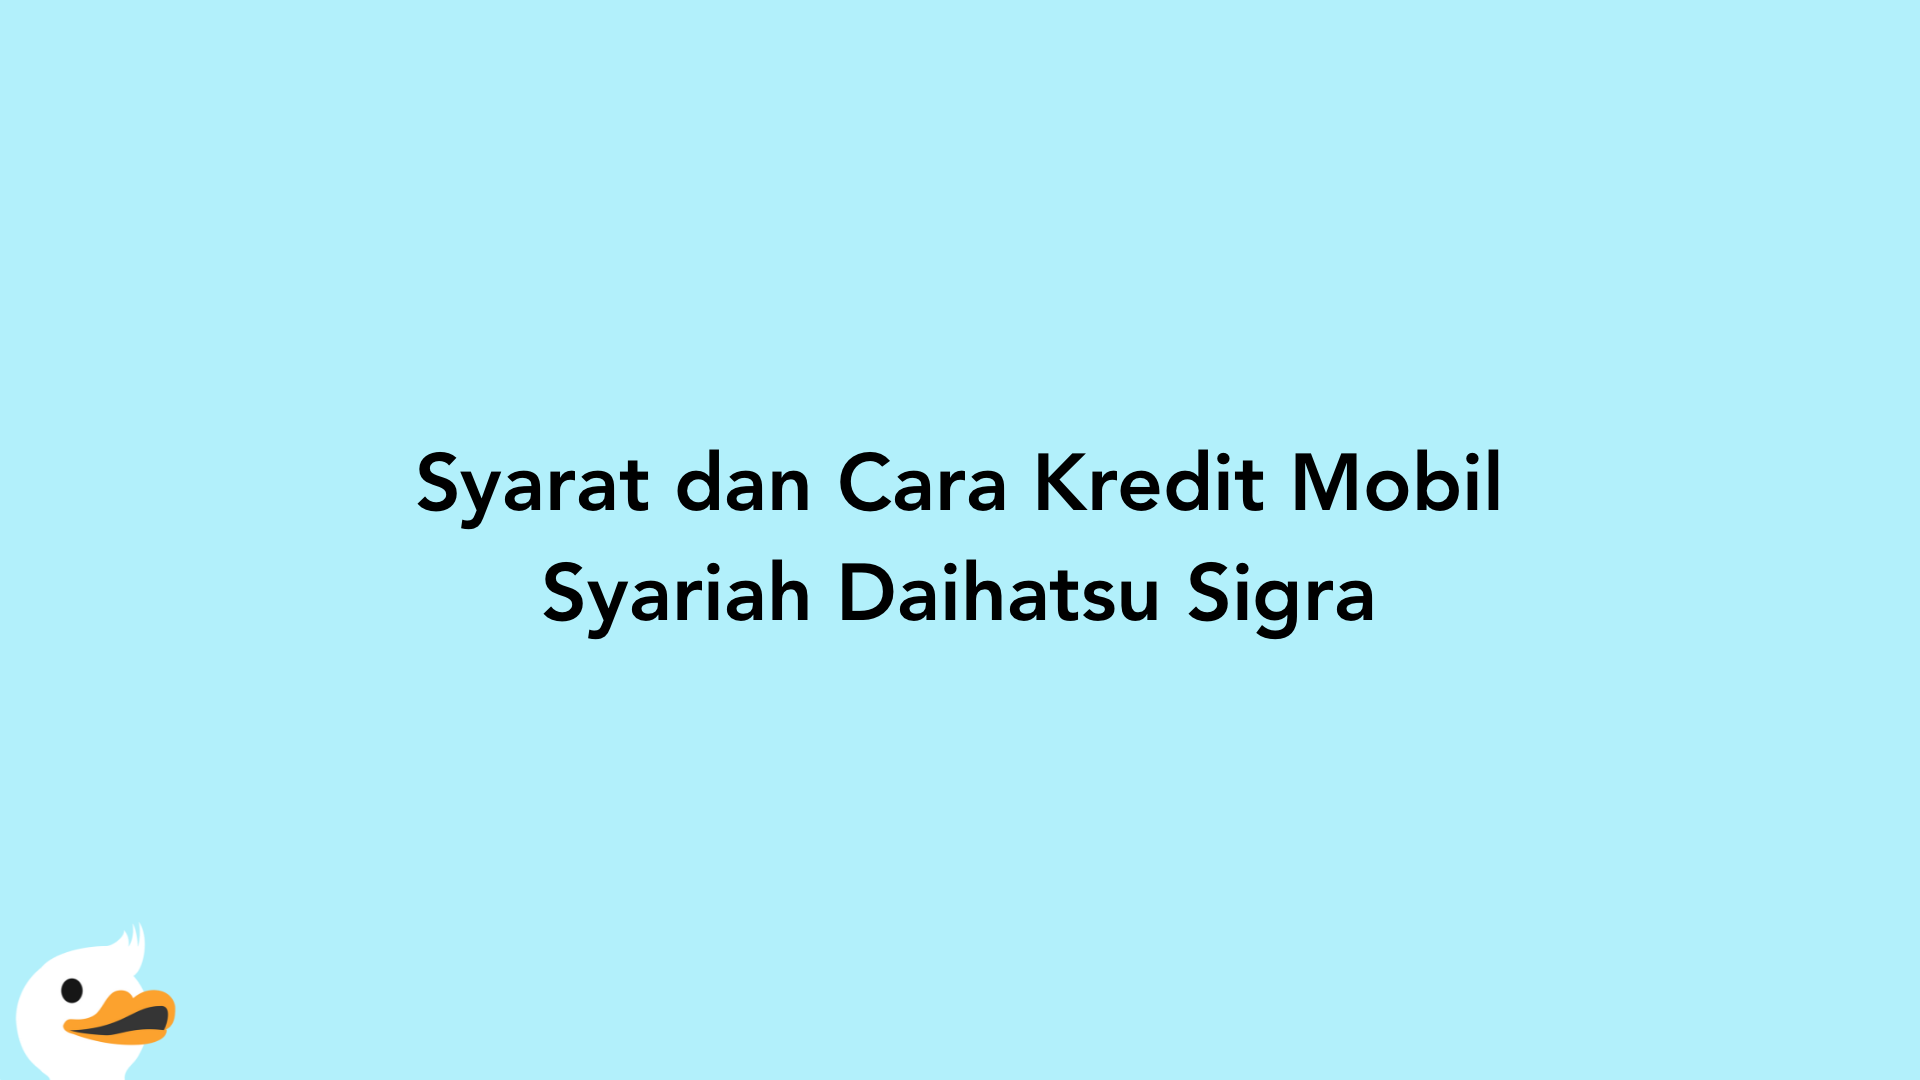 Syarat dan Cara Kredit Mobil Syariah Daihatsu Sigra